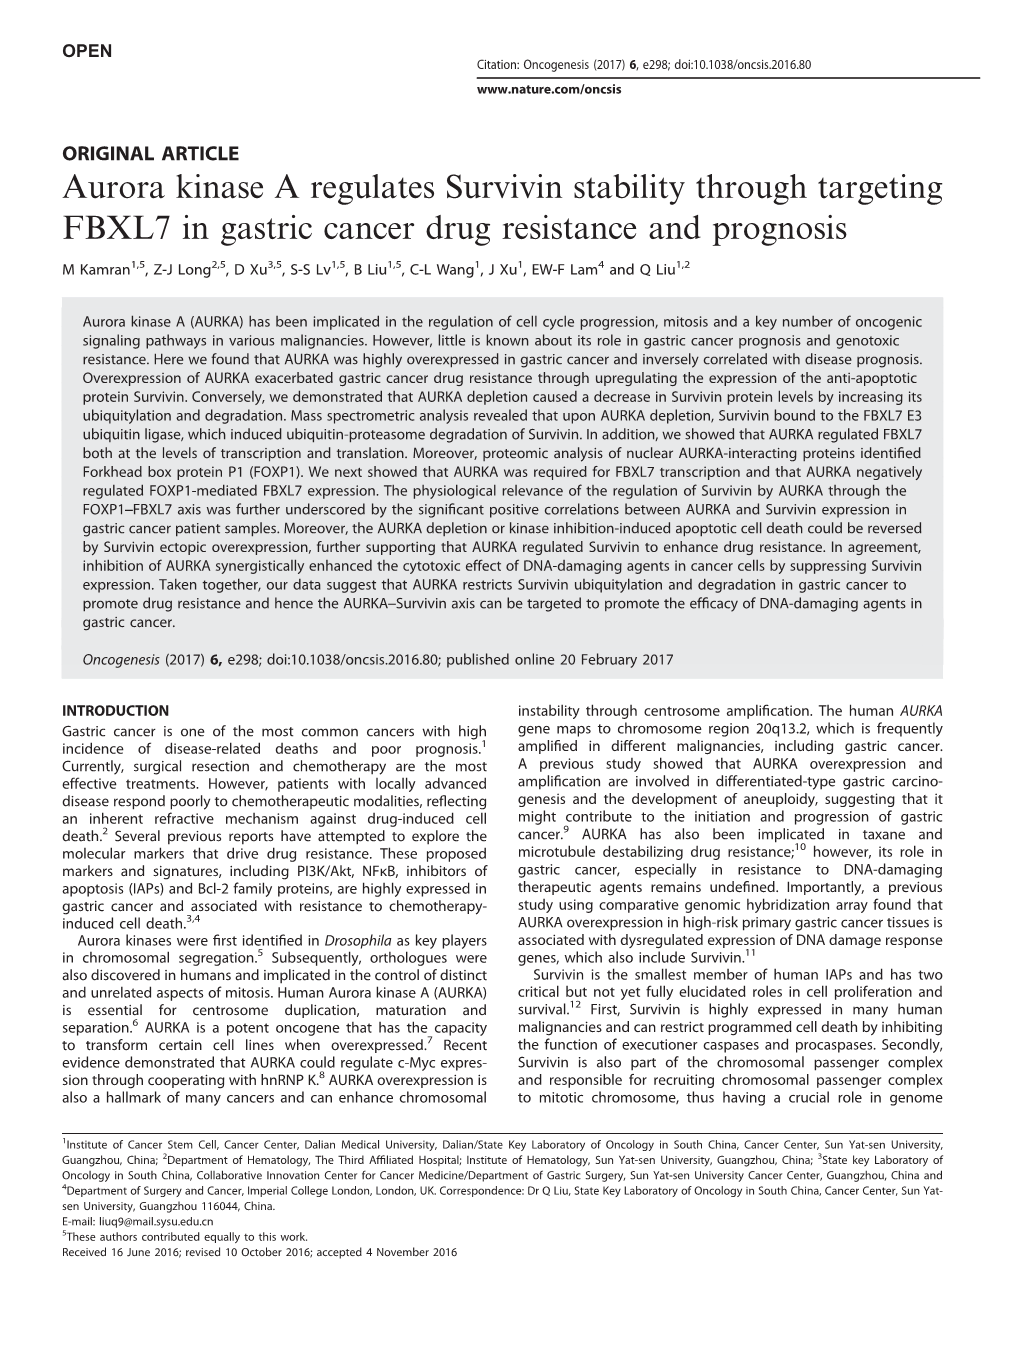 Aurora Kinase a Regulates Survivin Stability Through Targeting FBXL7 in Gastric Cancer Drug Resistance and Prognosis